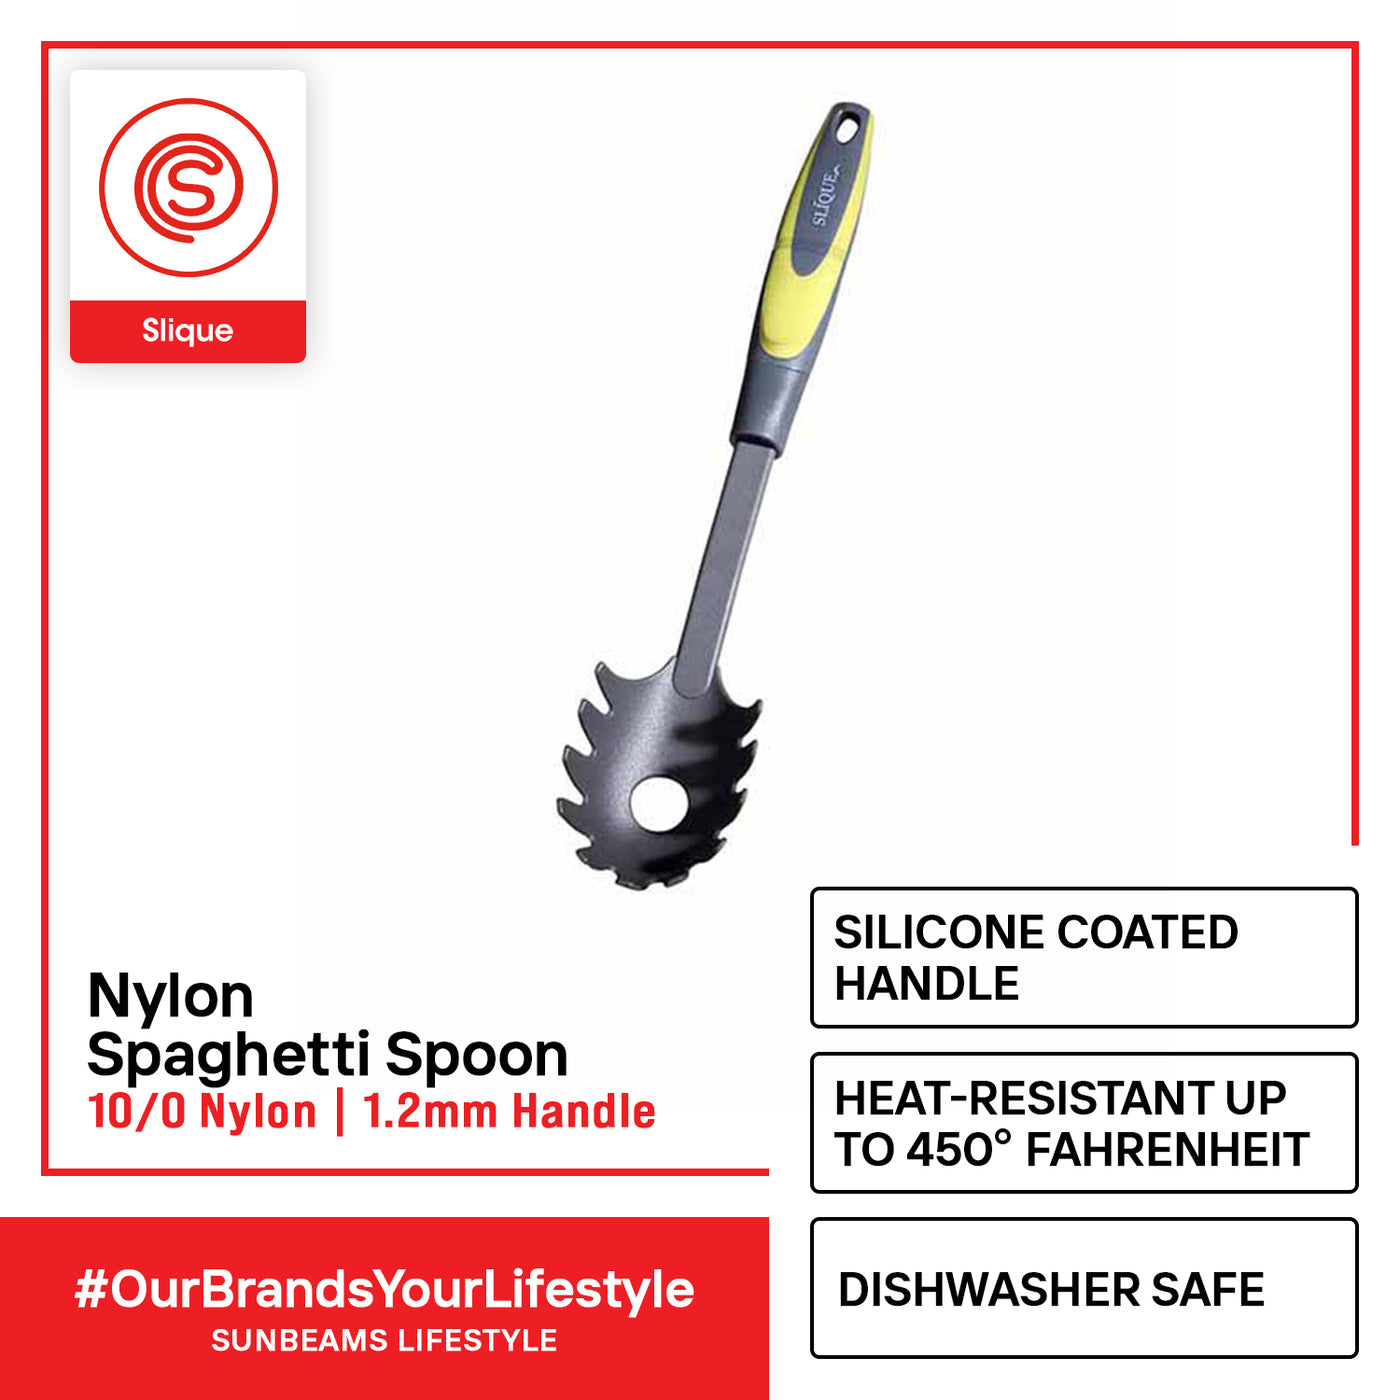 SLIQUE Premium Nylon Spaghetti Spoon TPR Silicone Handle Kitchen Essentials Amazing Gift Ideal For Any Occasion! (Green)